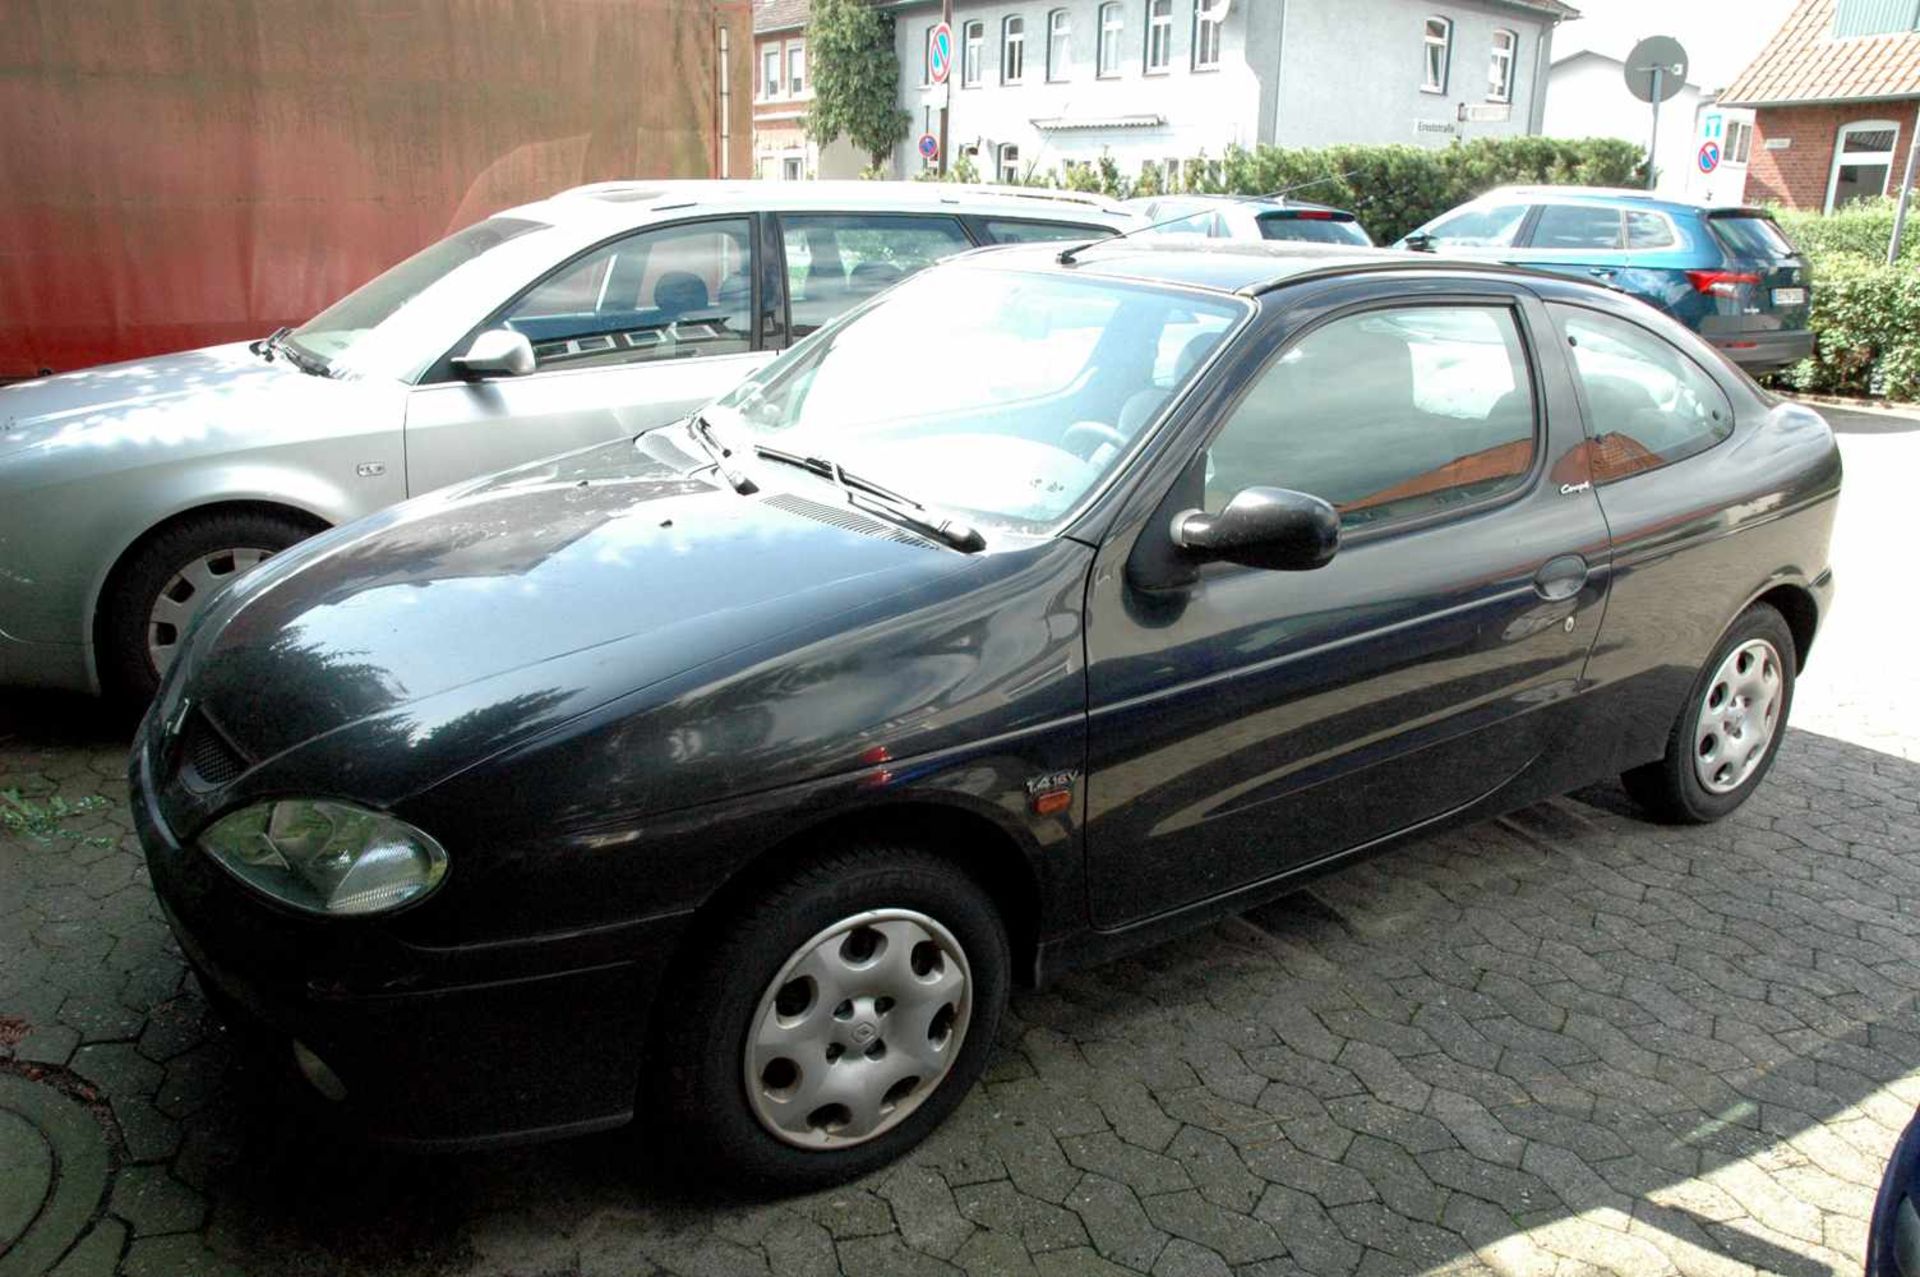 PKW, Renault Megane, EZ 06/99, schwarz